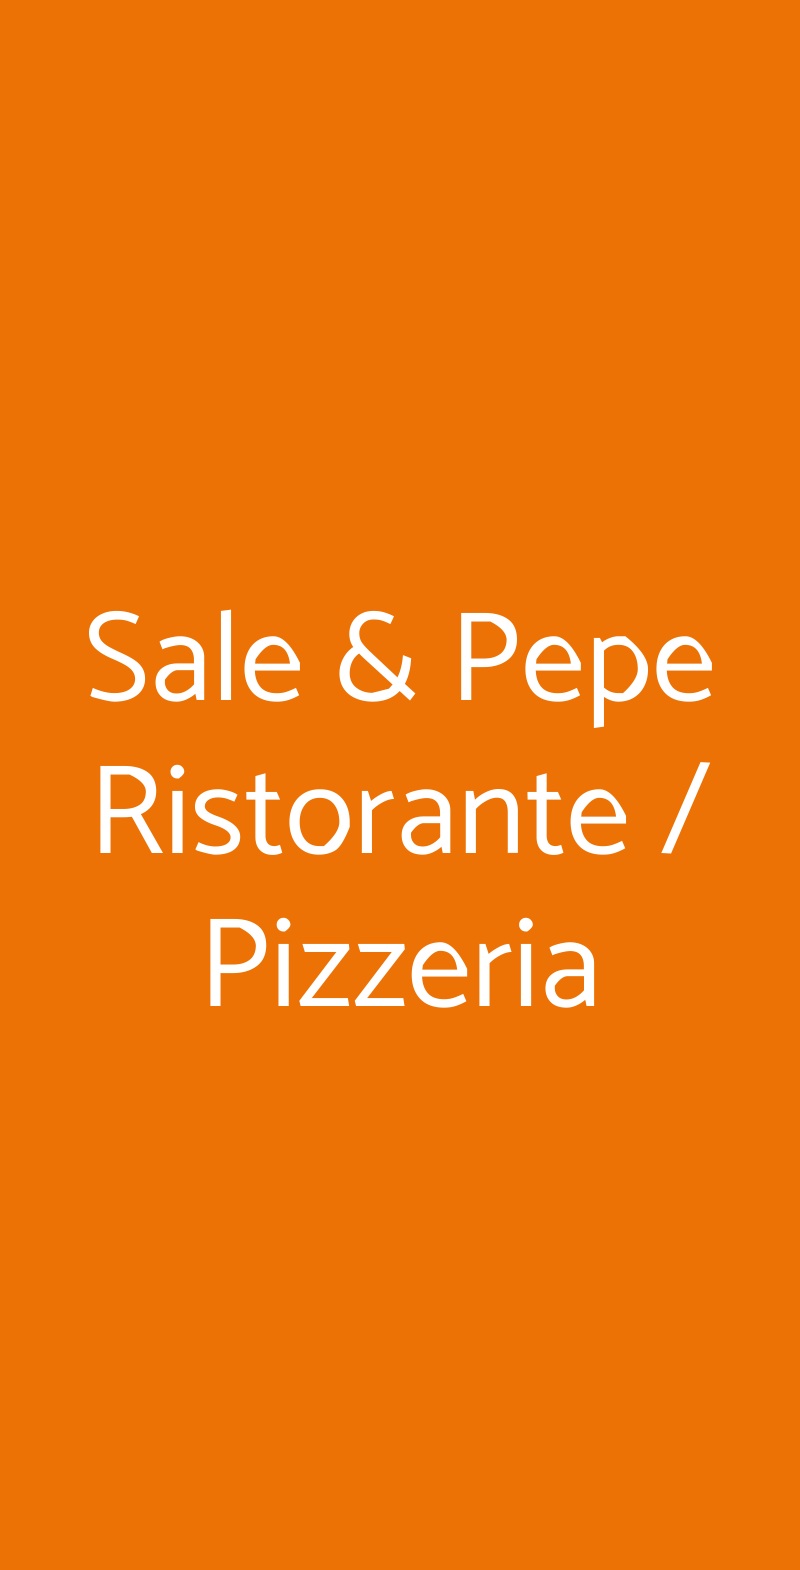 Sale & Pepe Ristorante / Pizzeria Marsala menù 1 pagina